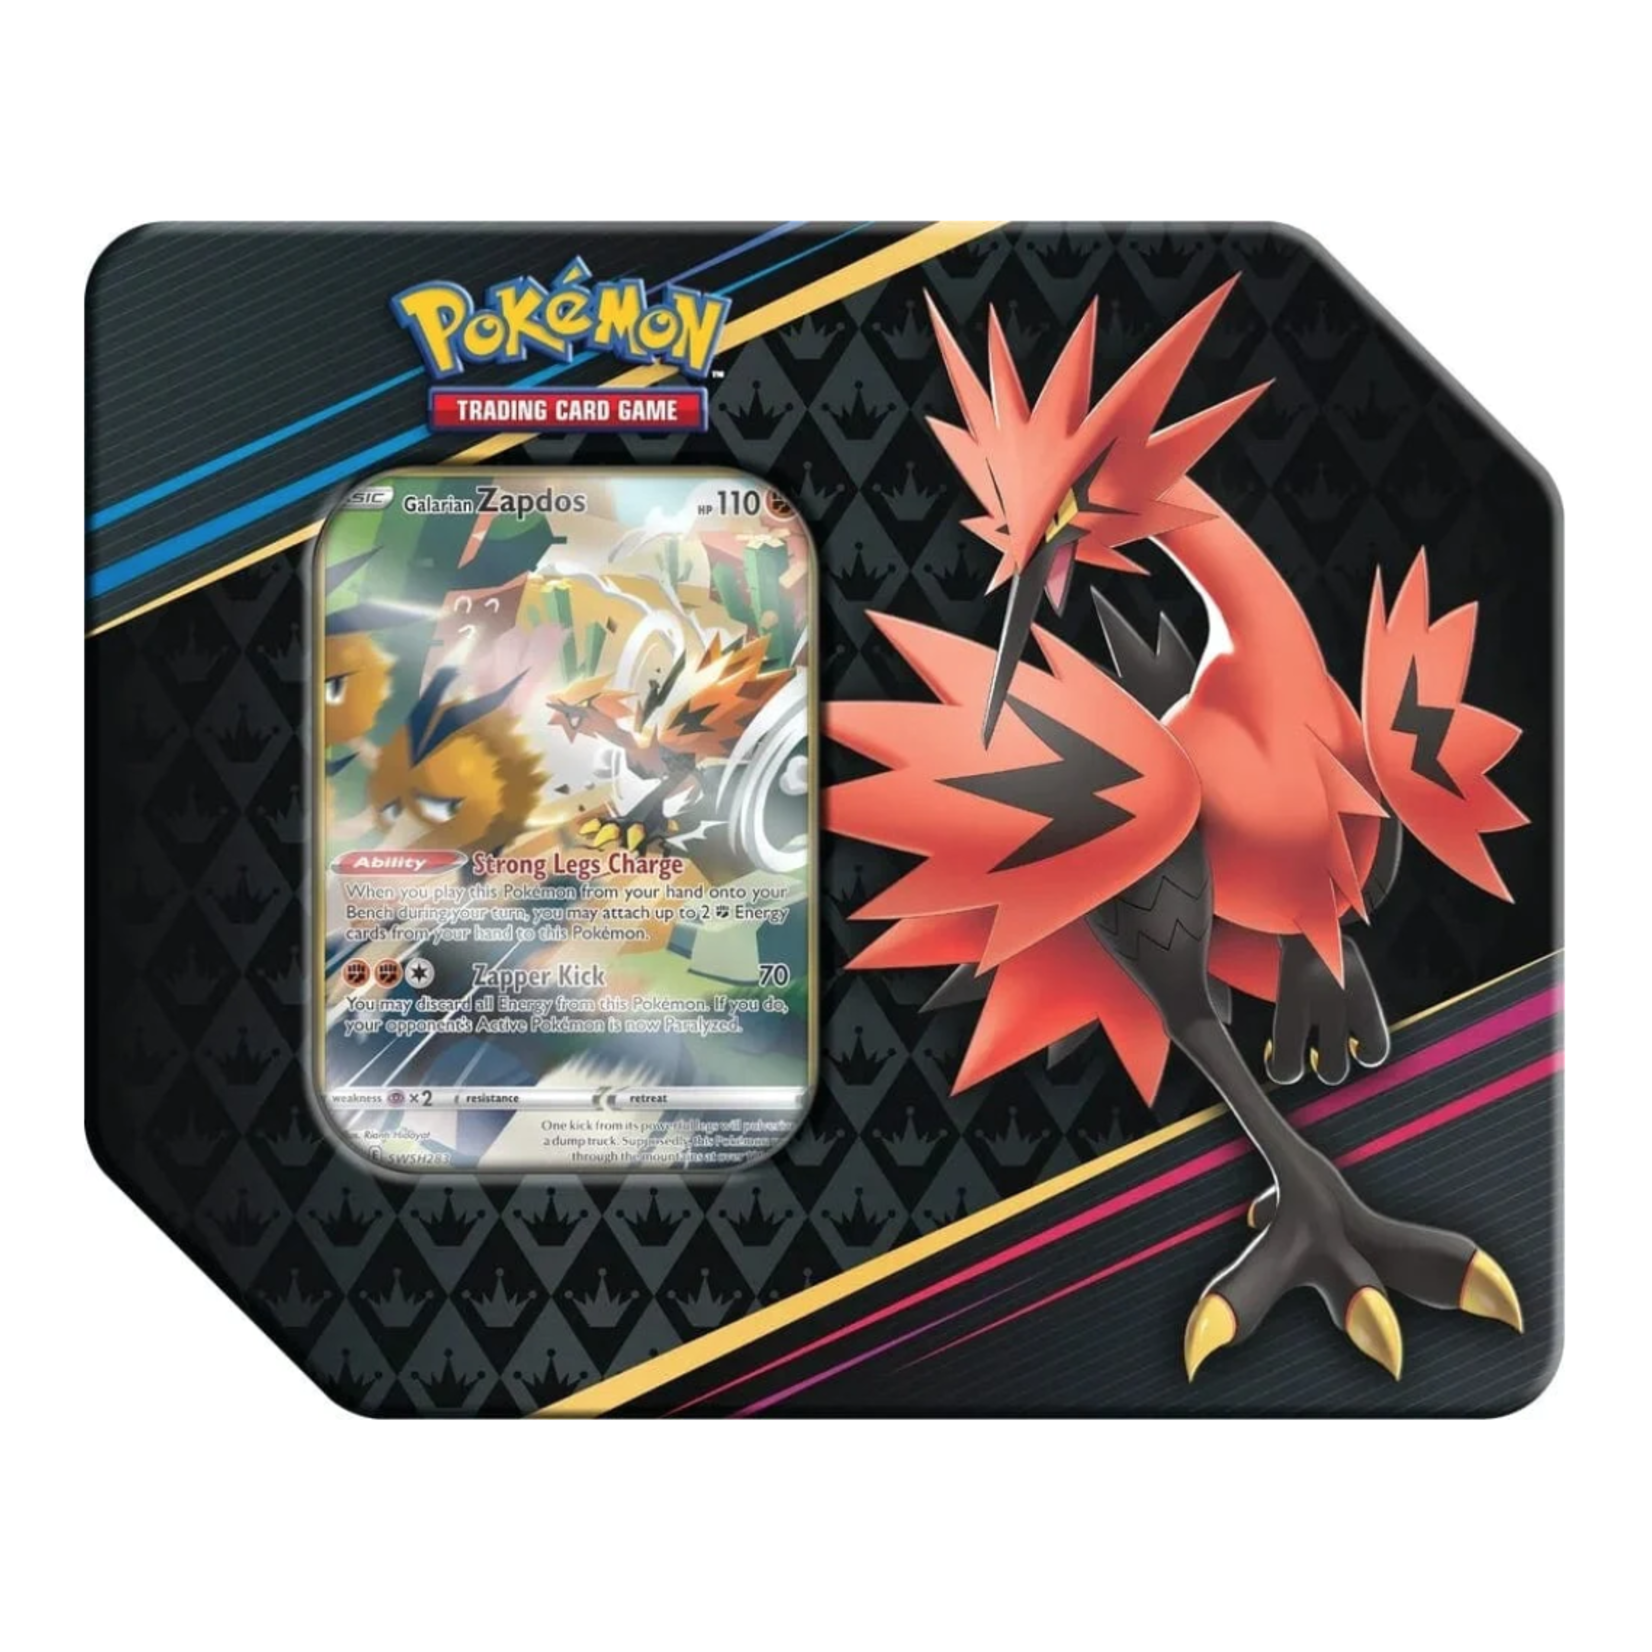 Pokémon Pokémon Trading Card Game: Crown Zenith Collection Tin (Galarian Zapdos)